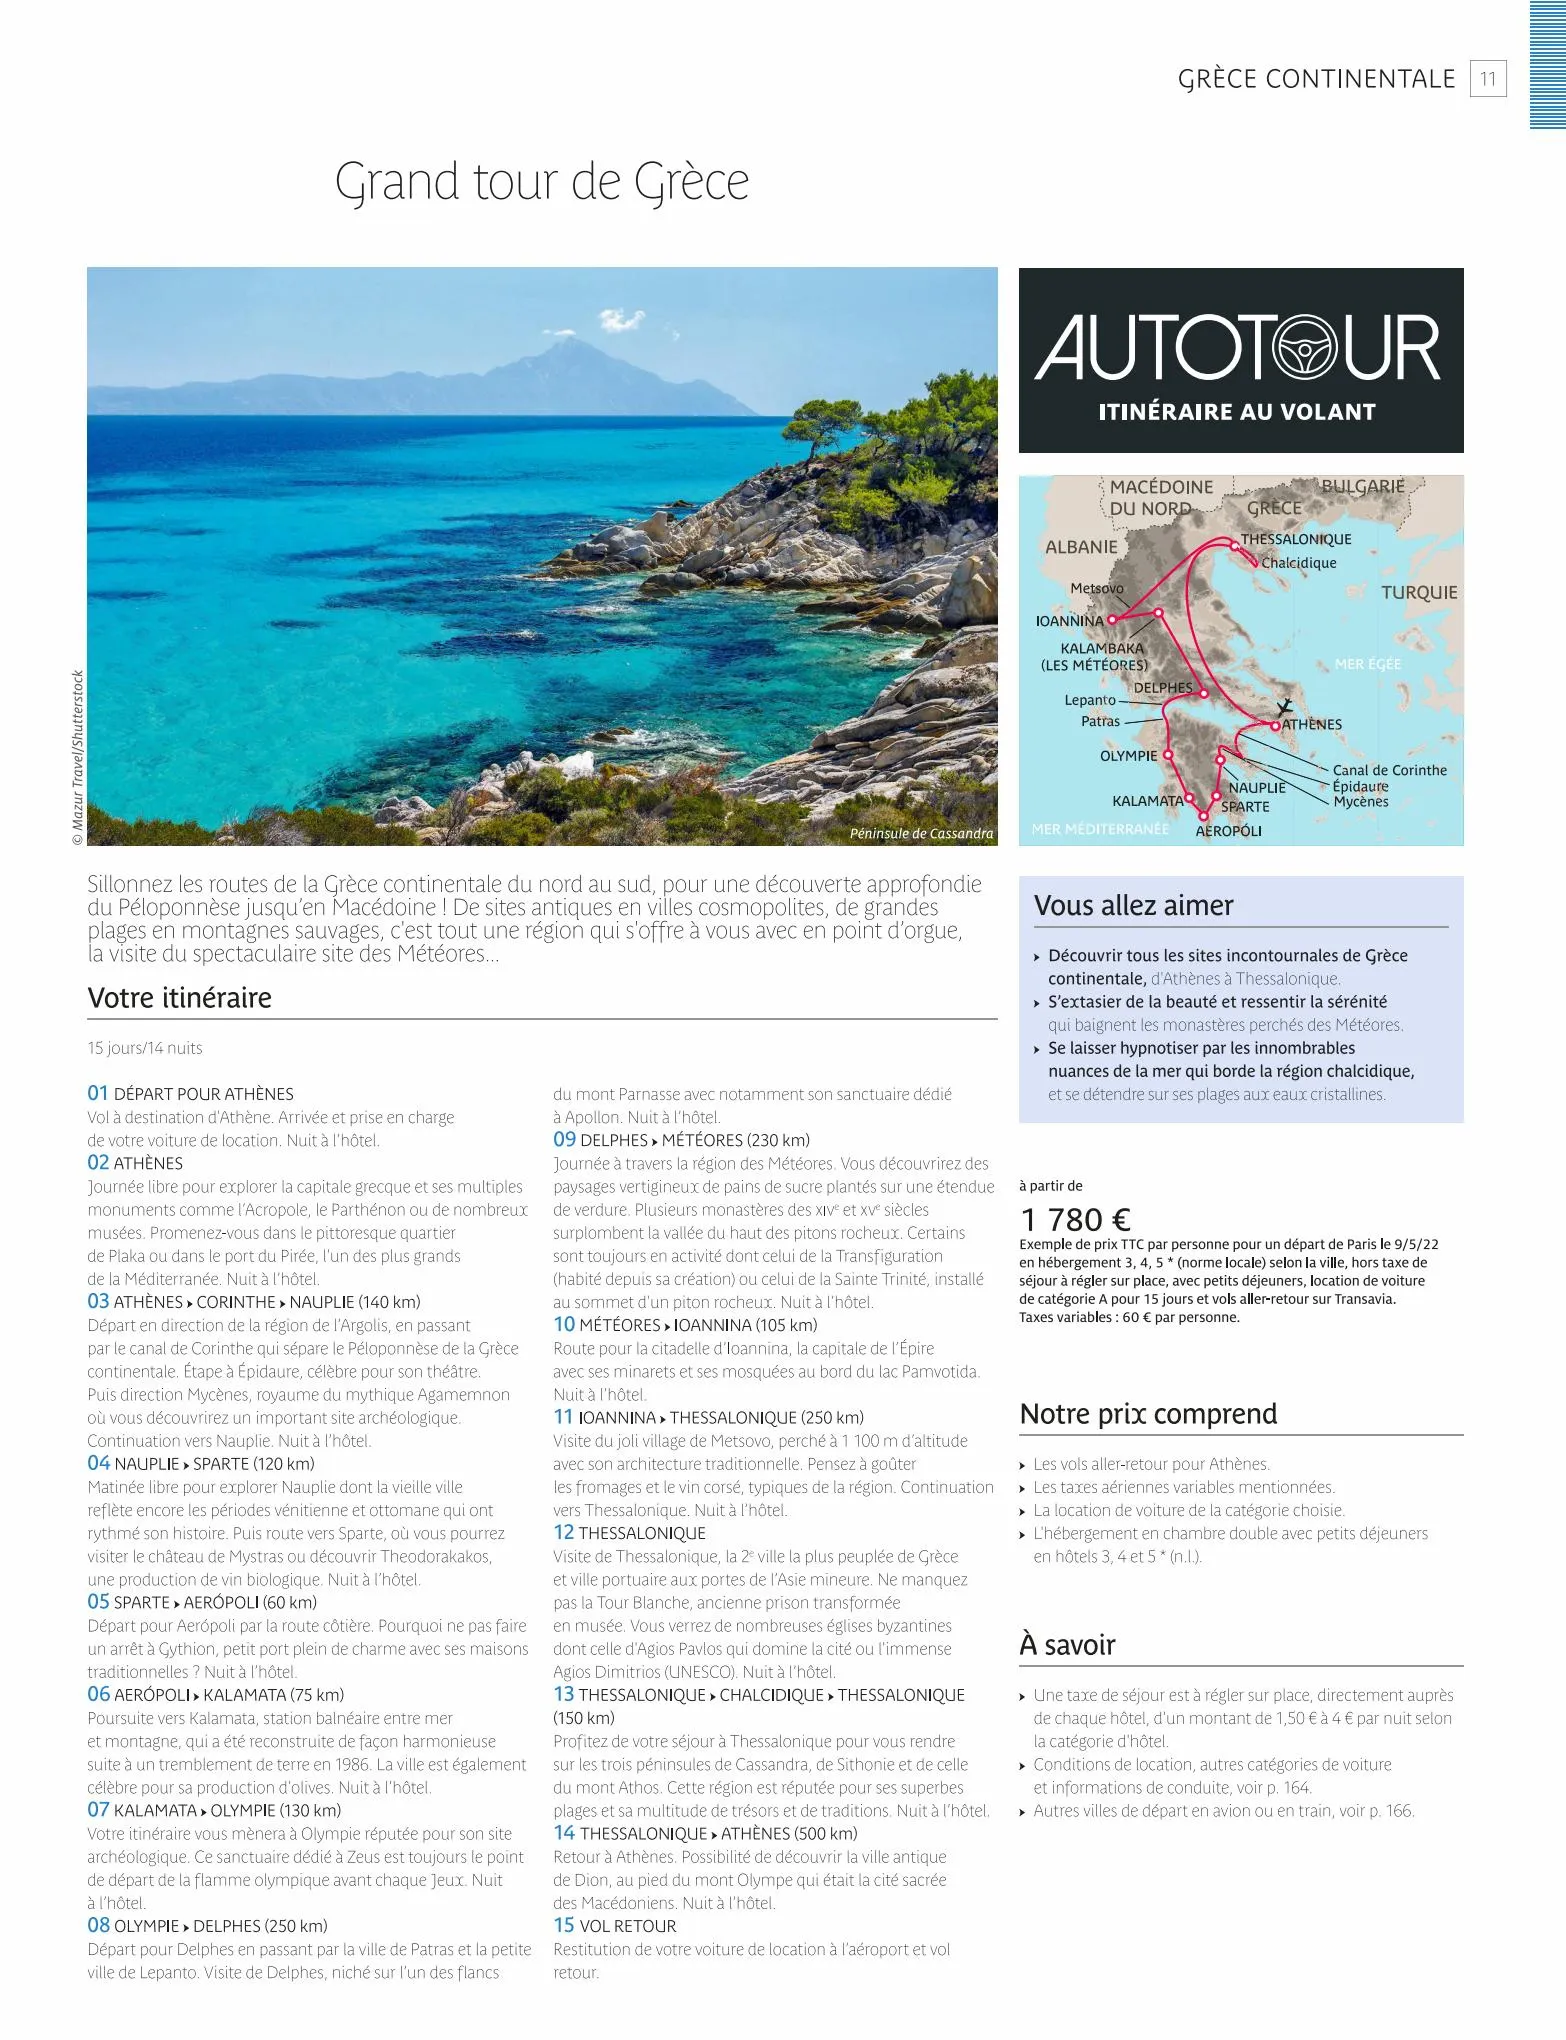 Catalogue Europe du Sud 2022, page 00013